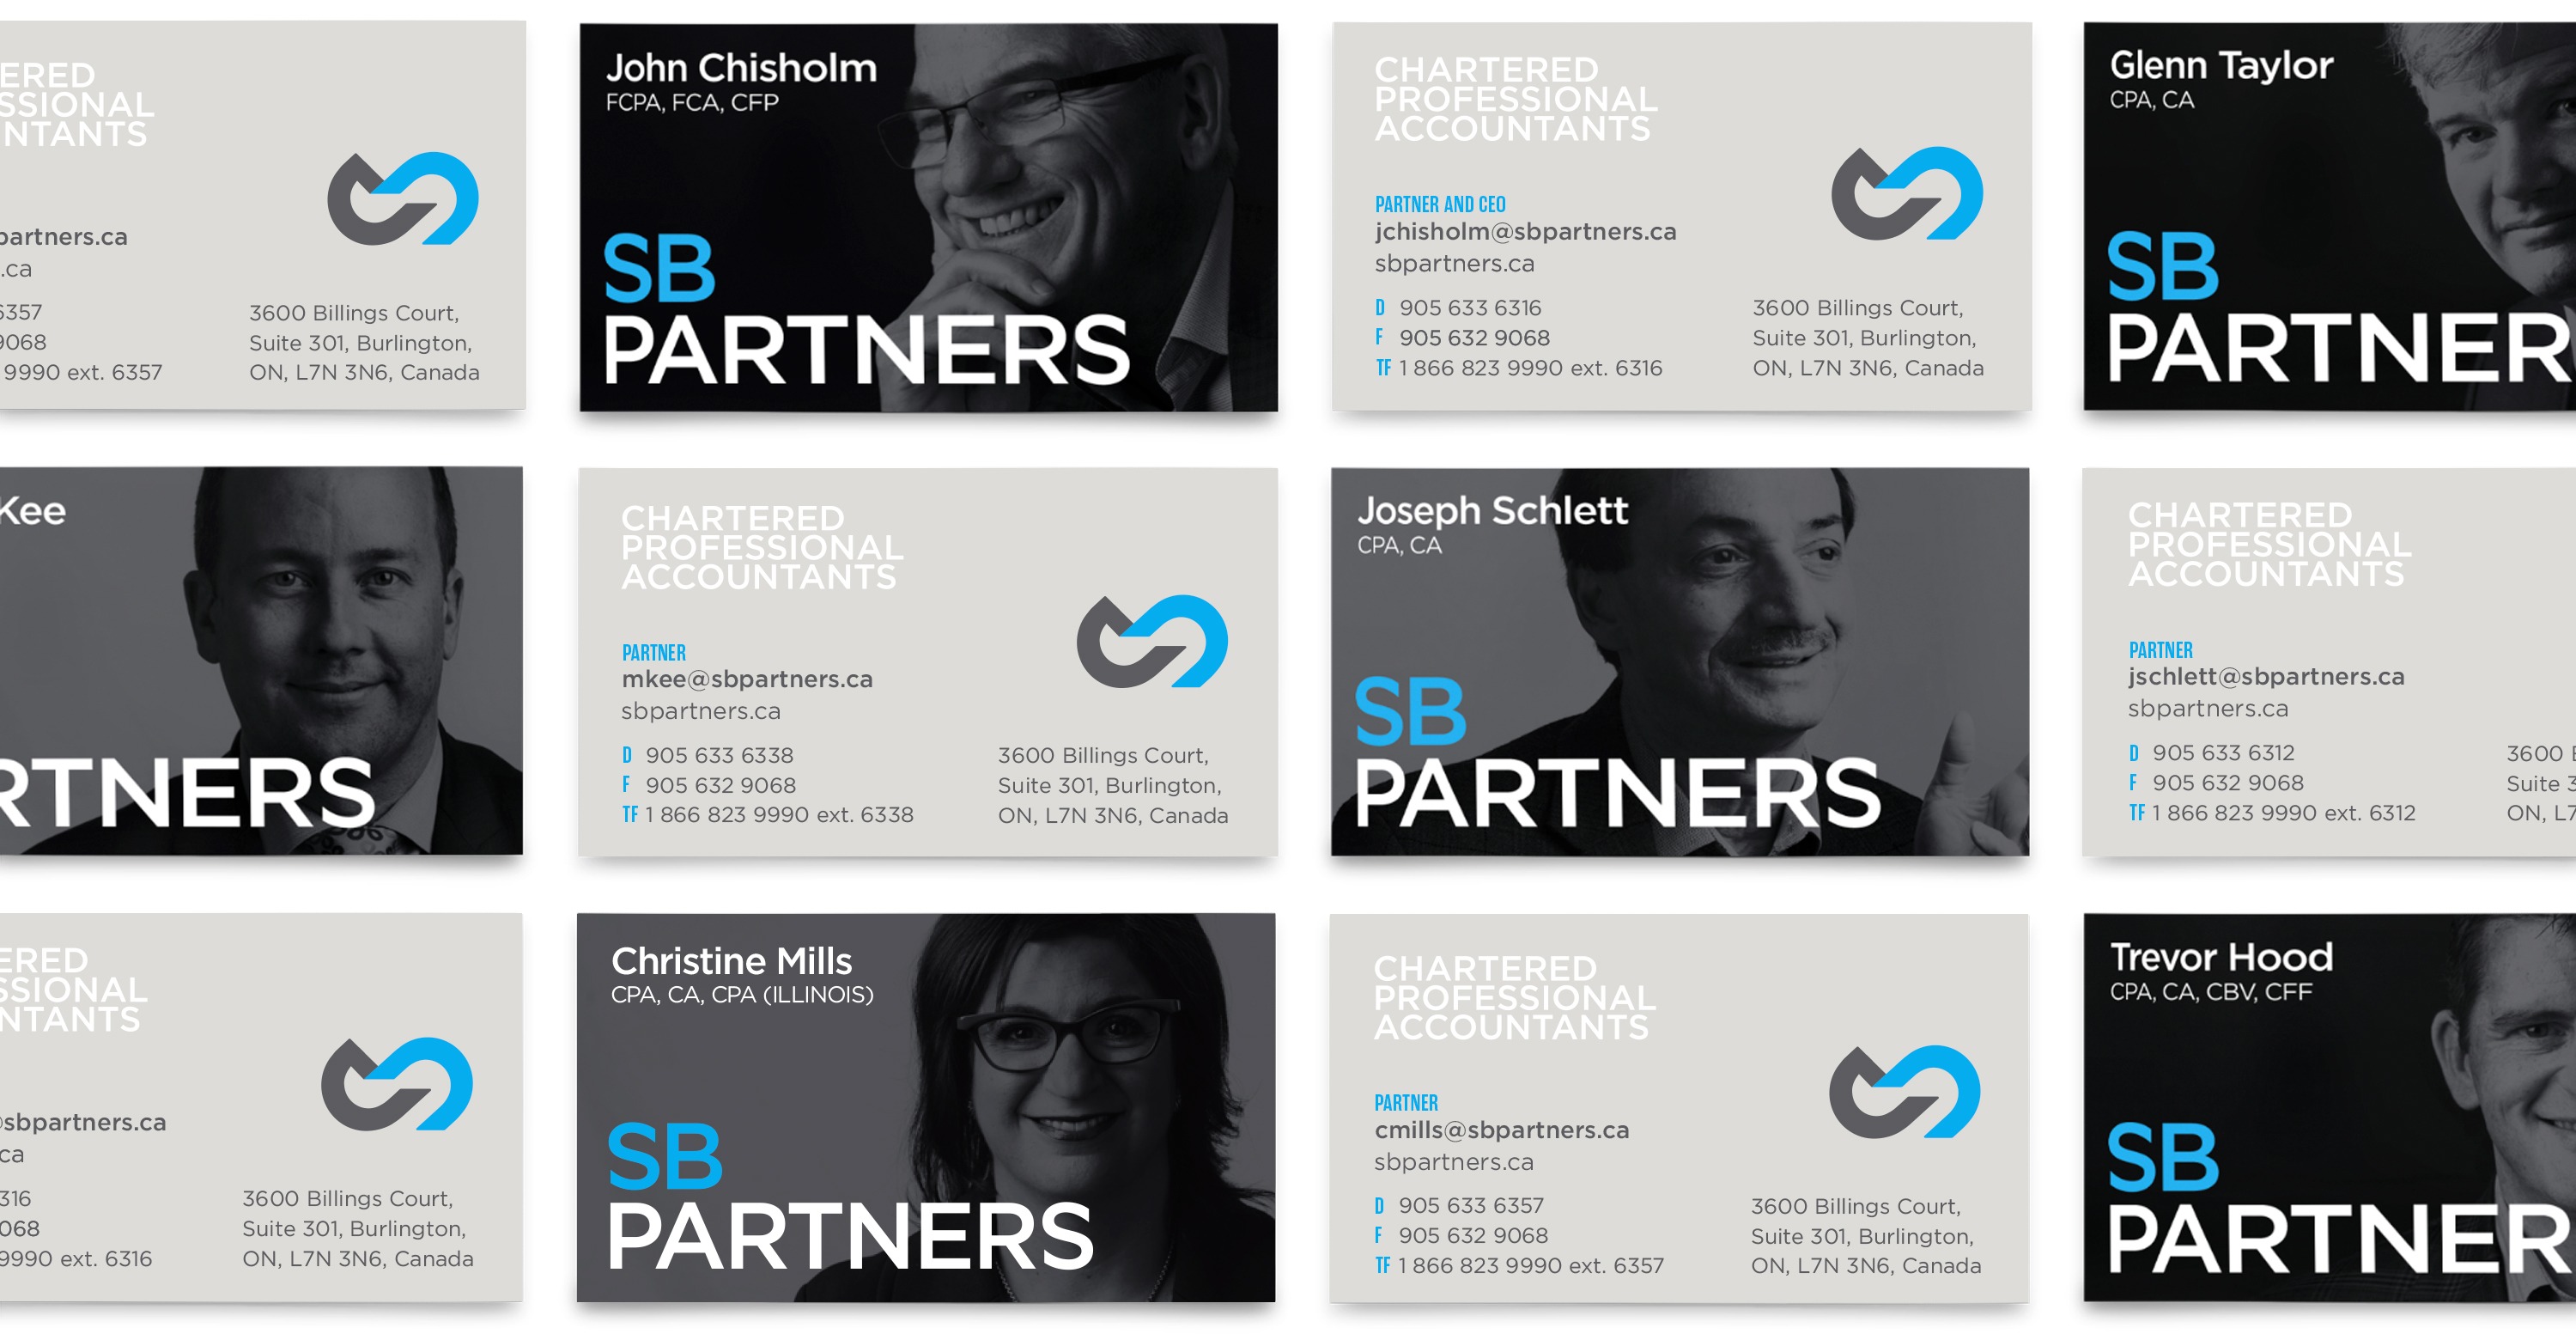 SB Partners Business Card Design | Dossier Creative | Collaborative Rebrand